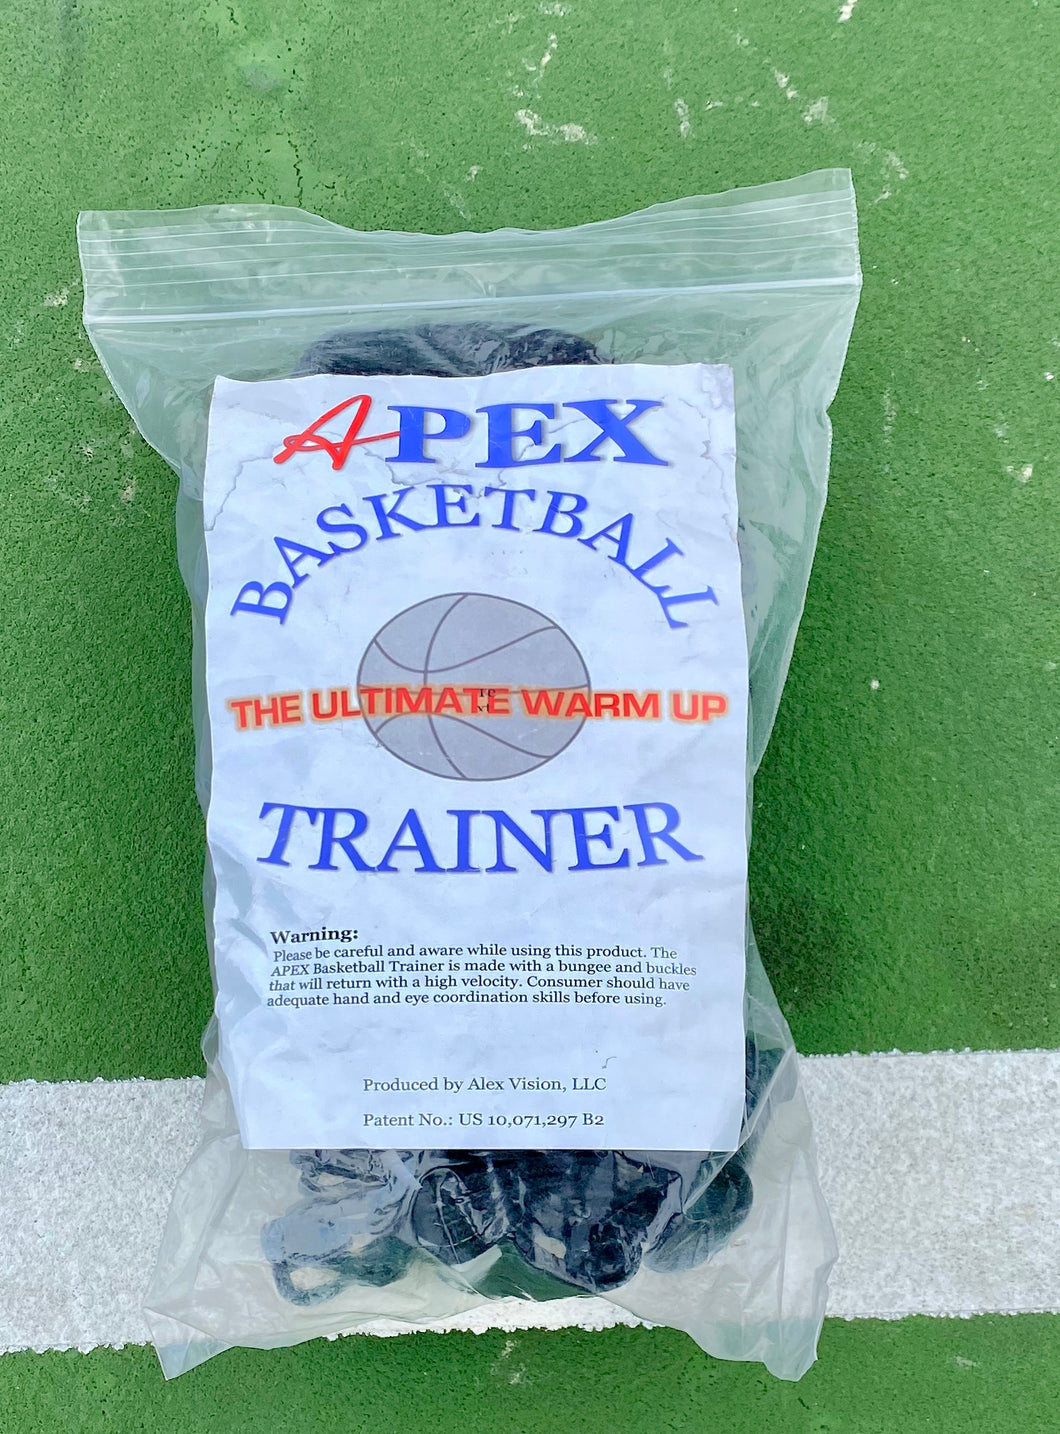 Apex Basketball Trainer